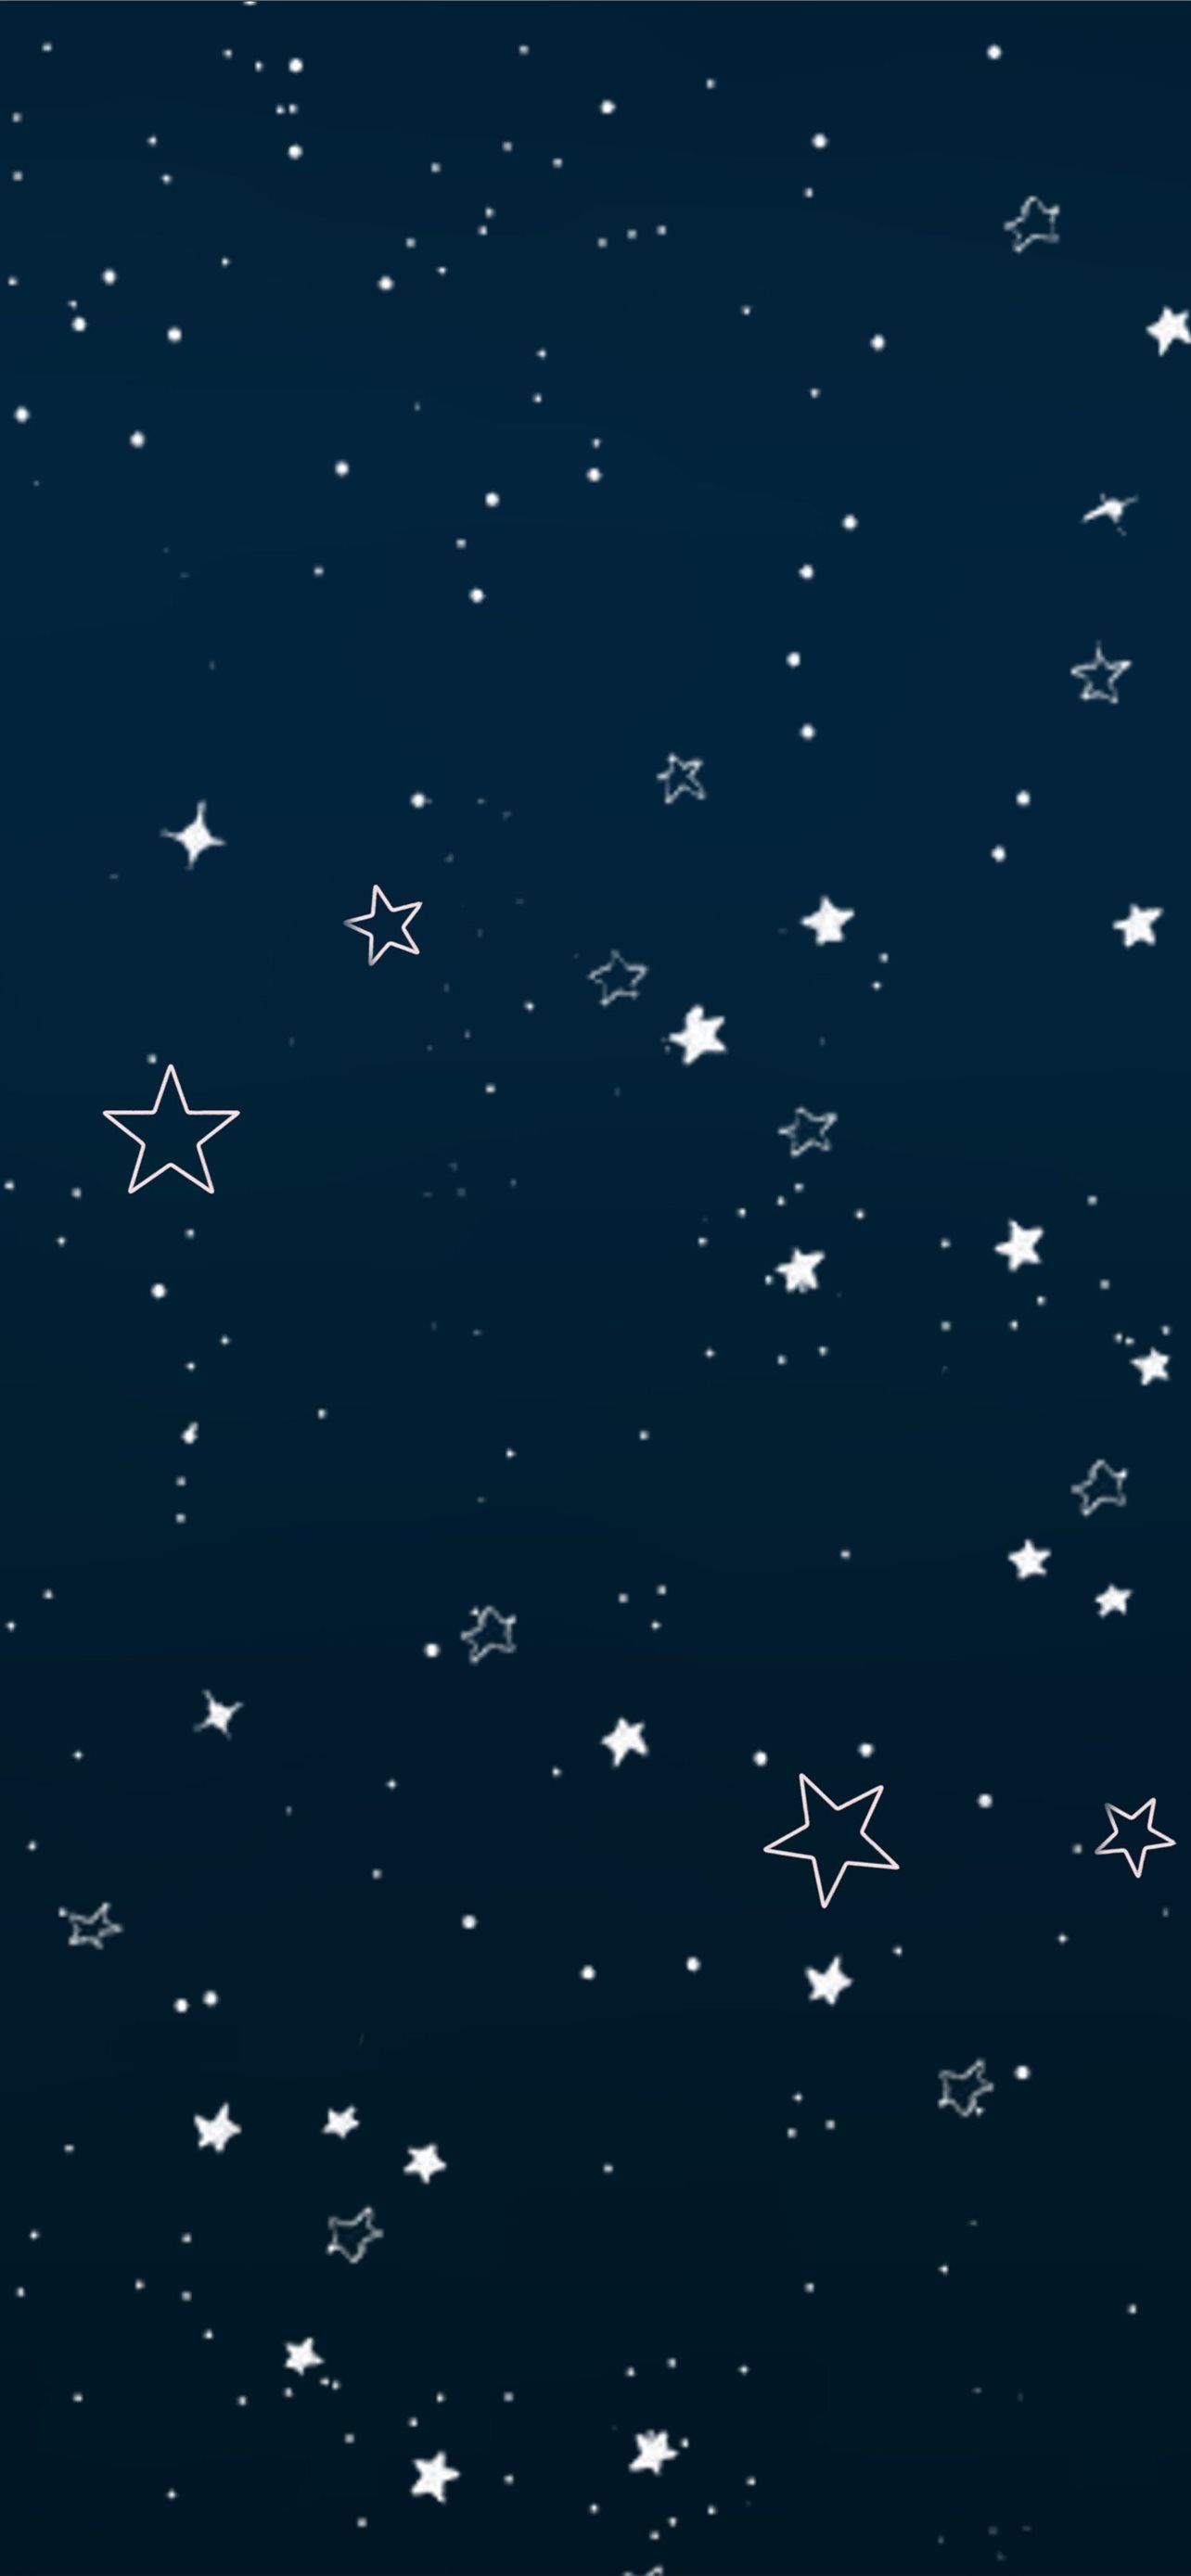 Falling stars on a dark blue background - Stars, Gemini